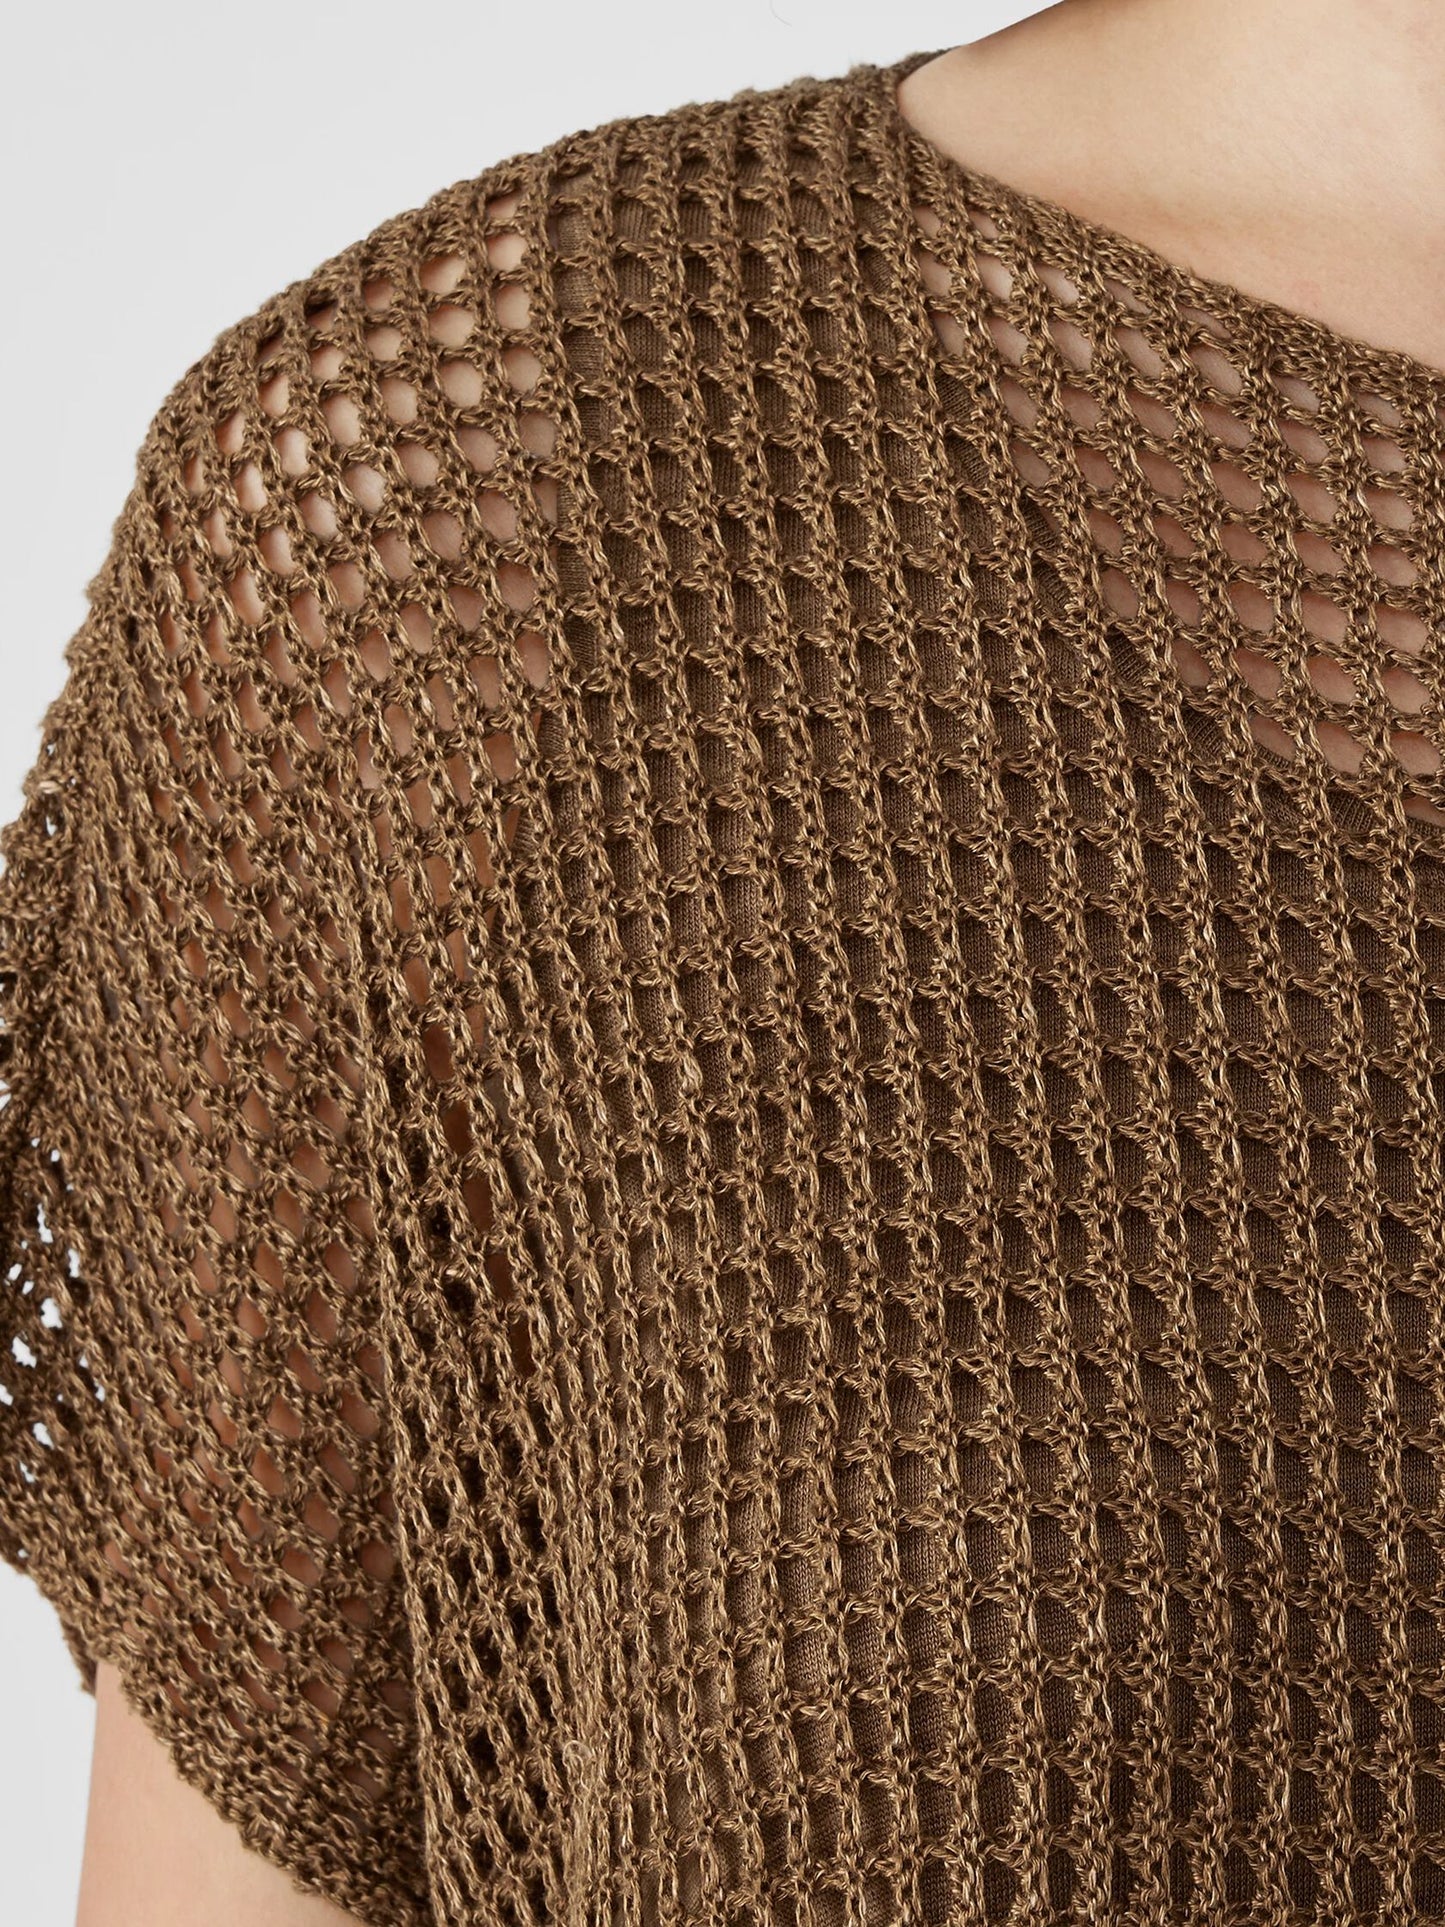 Eileen Fisher Organic Linen Open Knit Bateau Neck Top